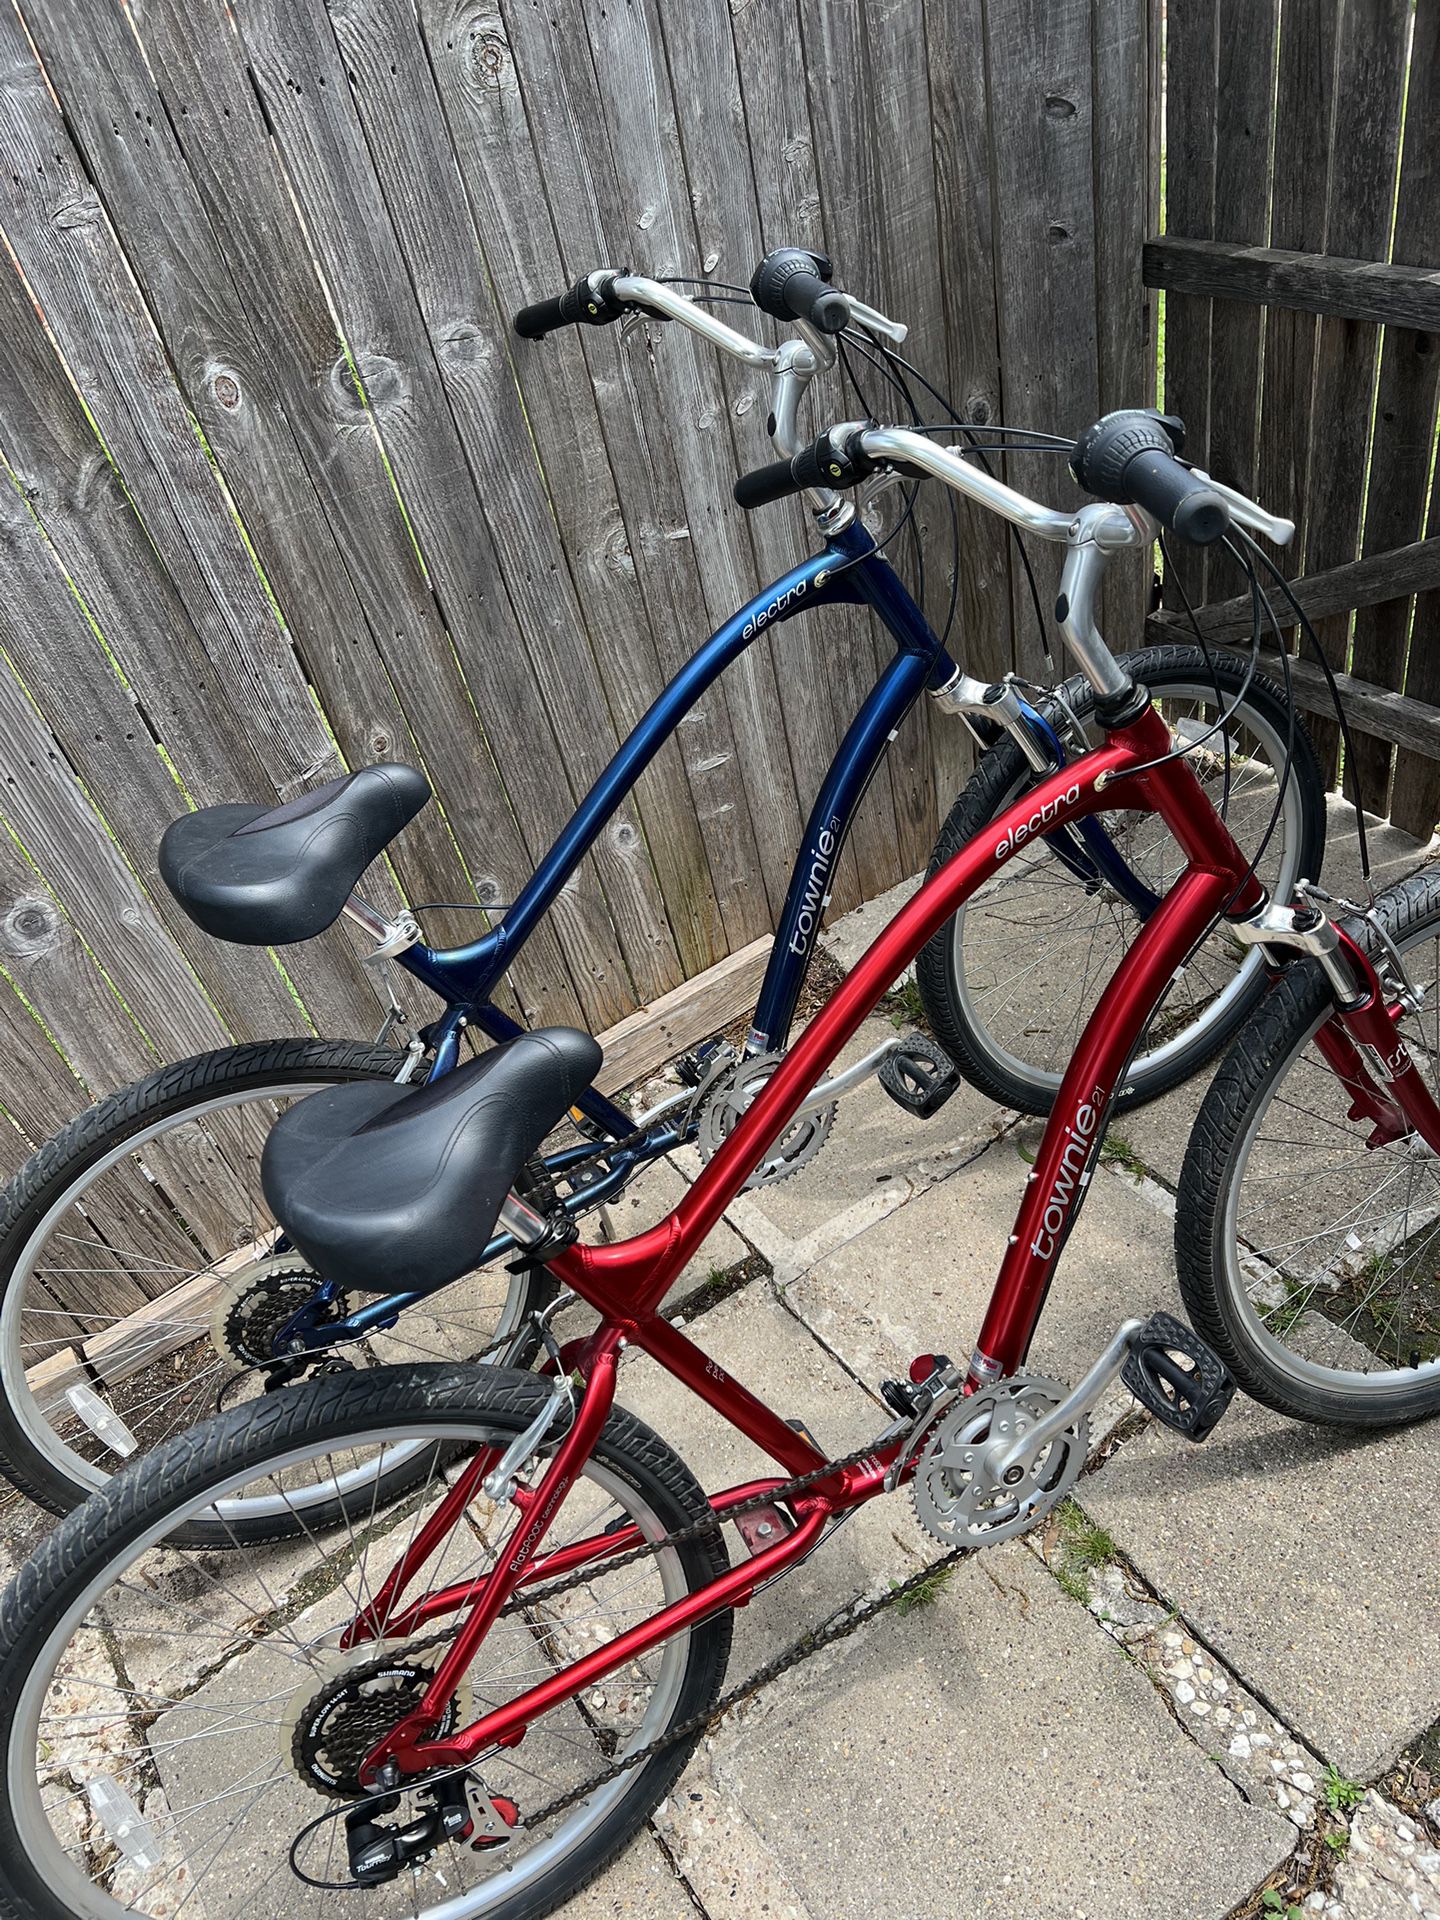 *PARTNER SET* Electra - Townie 21  26” wheel  Cruiser bikes (Red/Blue)  3x7 gearing  Front suspension  